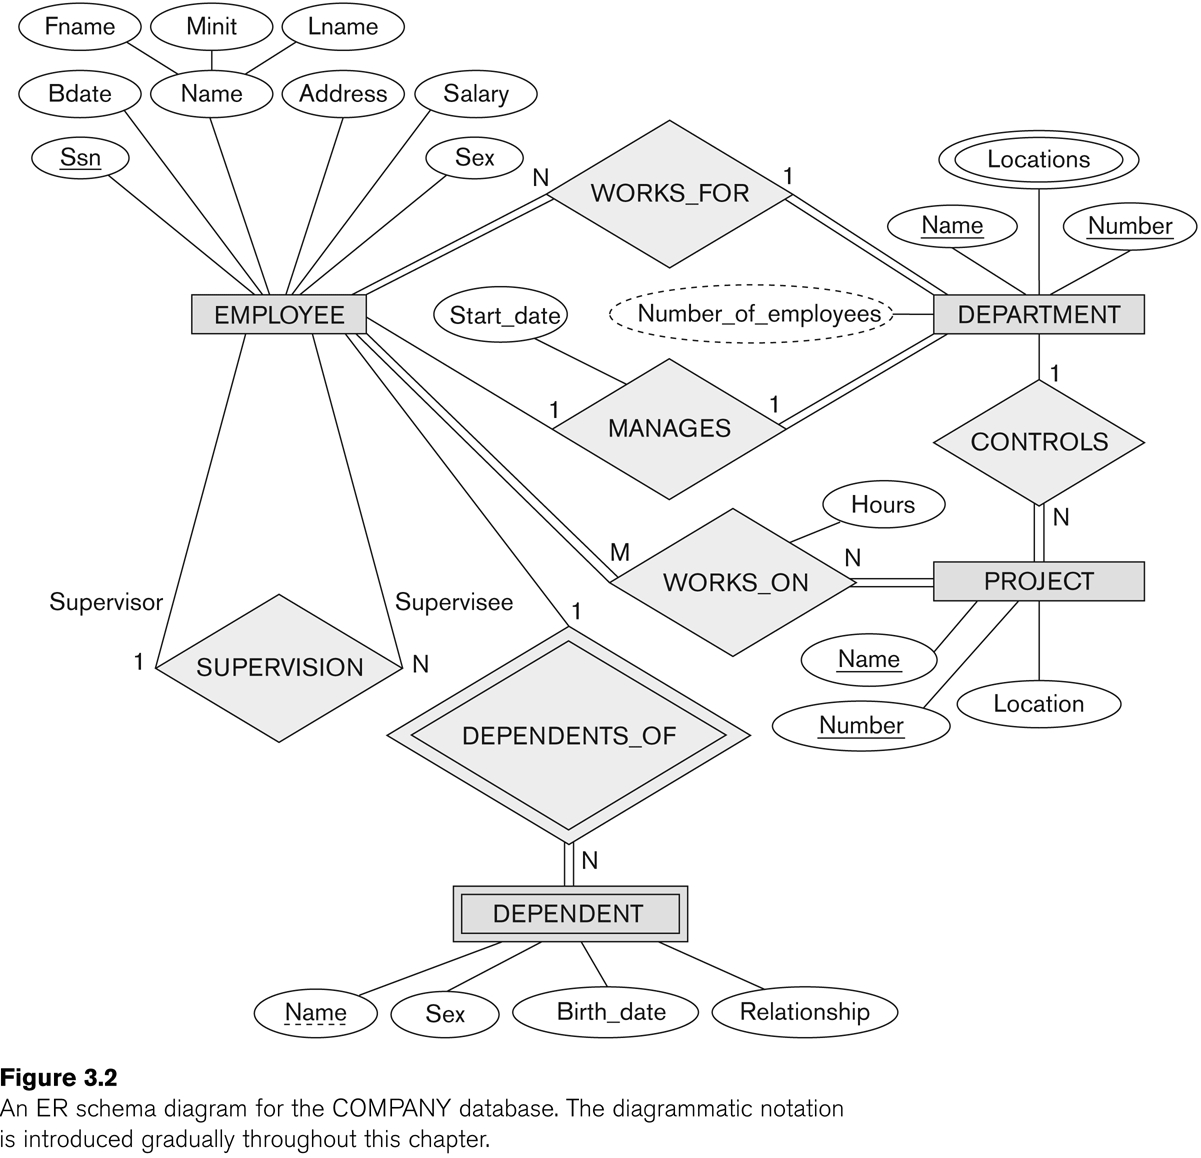 Entity-Relationship Modeling with Er Diagram In Rdbms